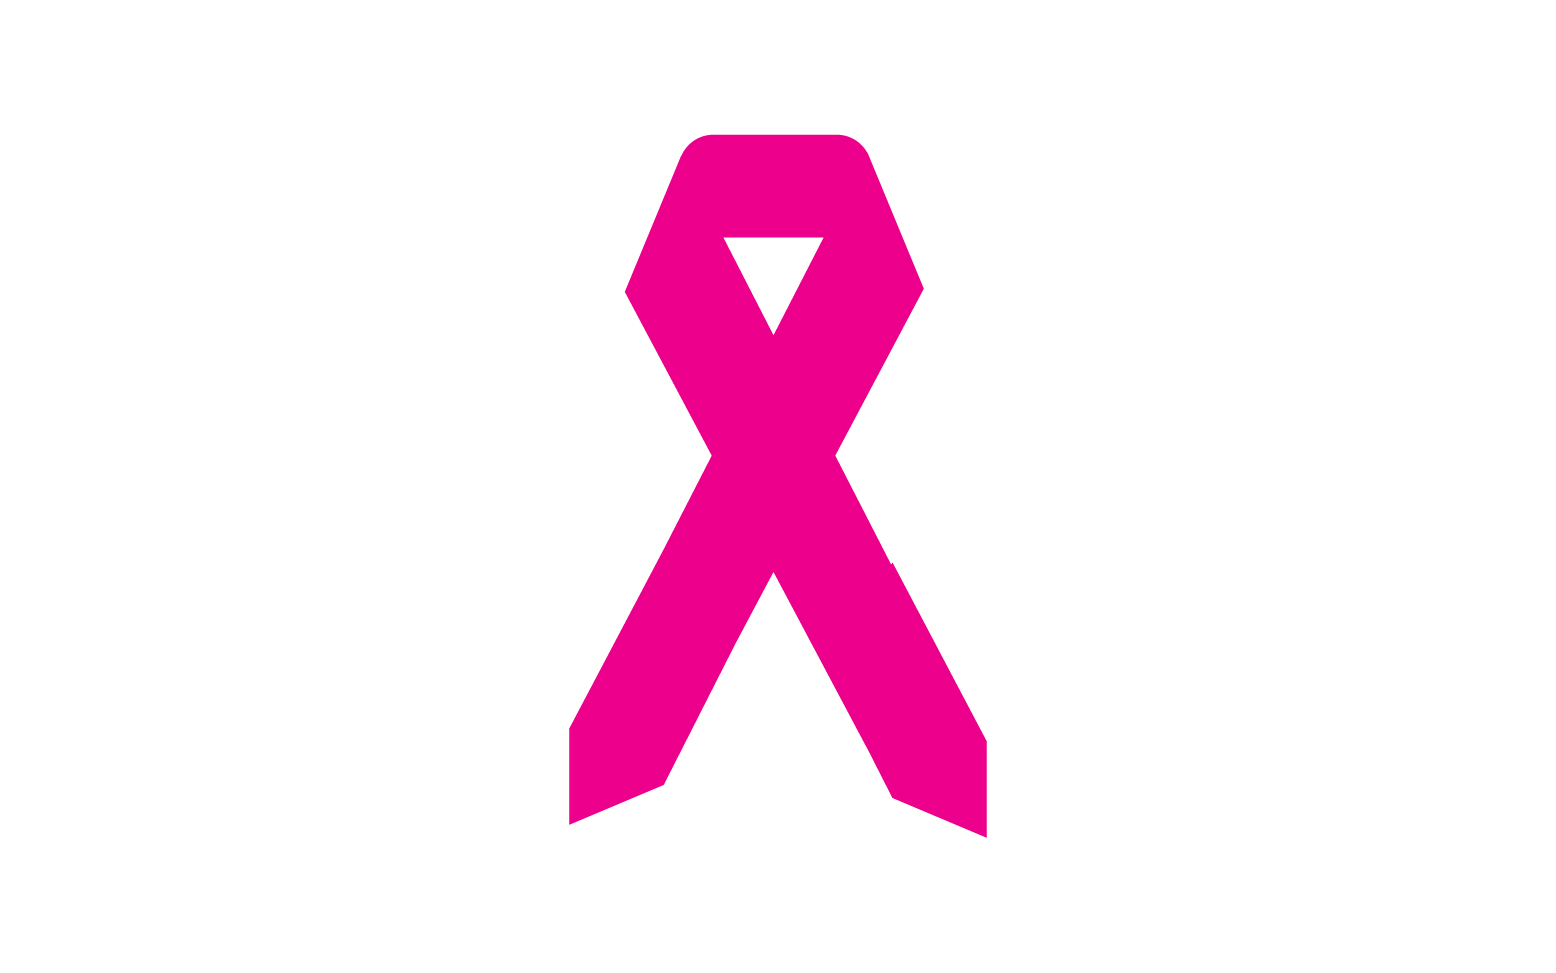 Ribbon pink icon logo element version v7